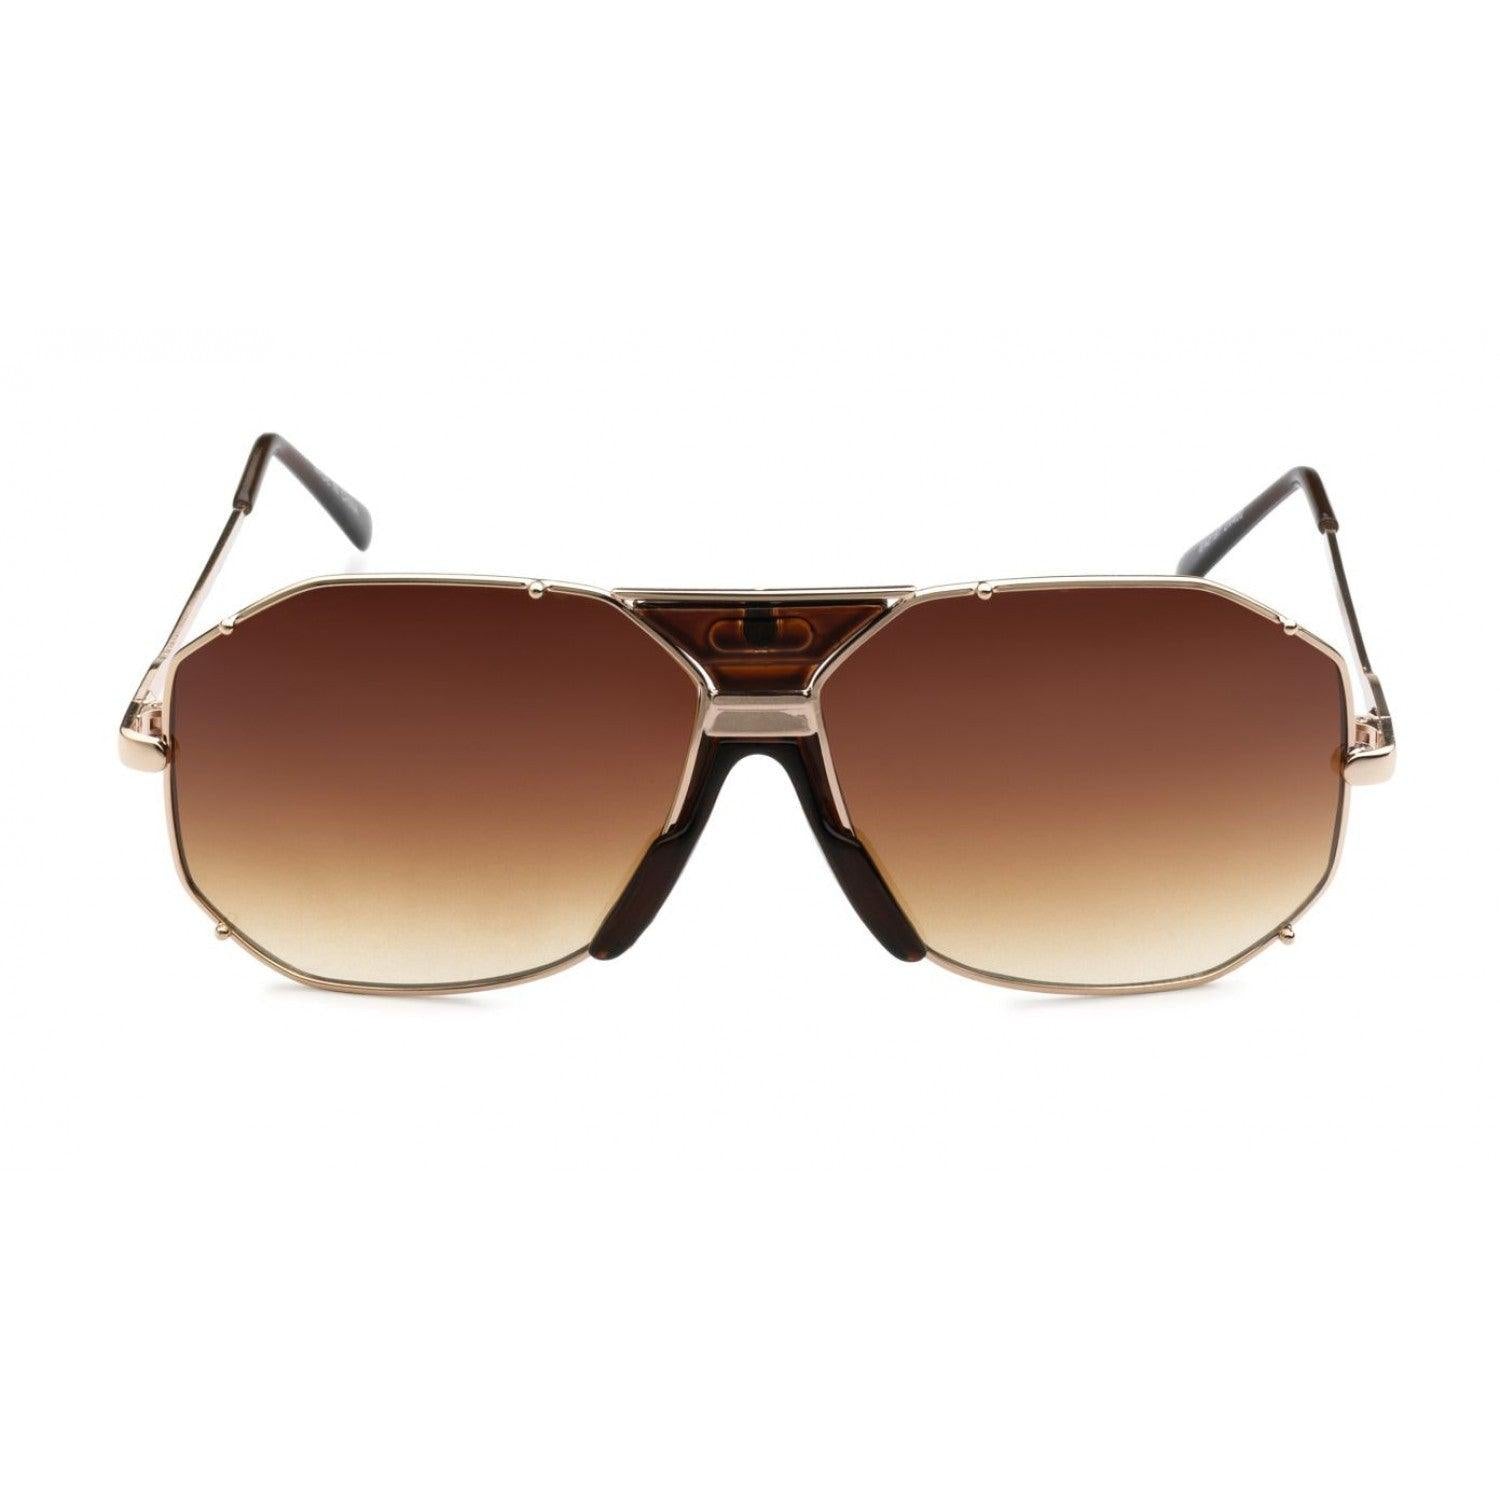 "MR. FOXY" Aviator Sunglasses - Weekend Shade Sunglasses